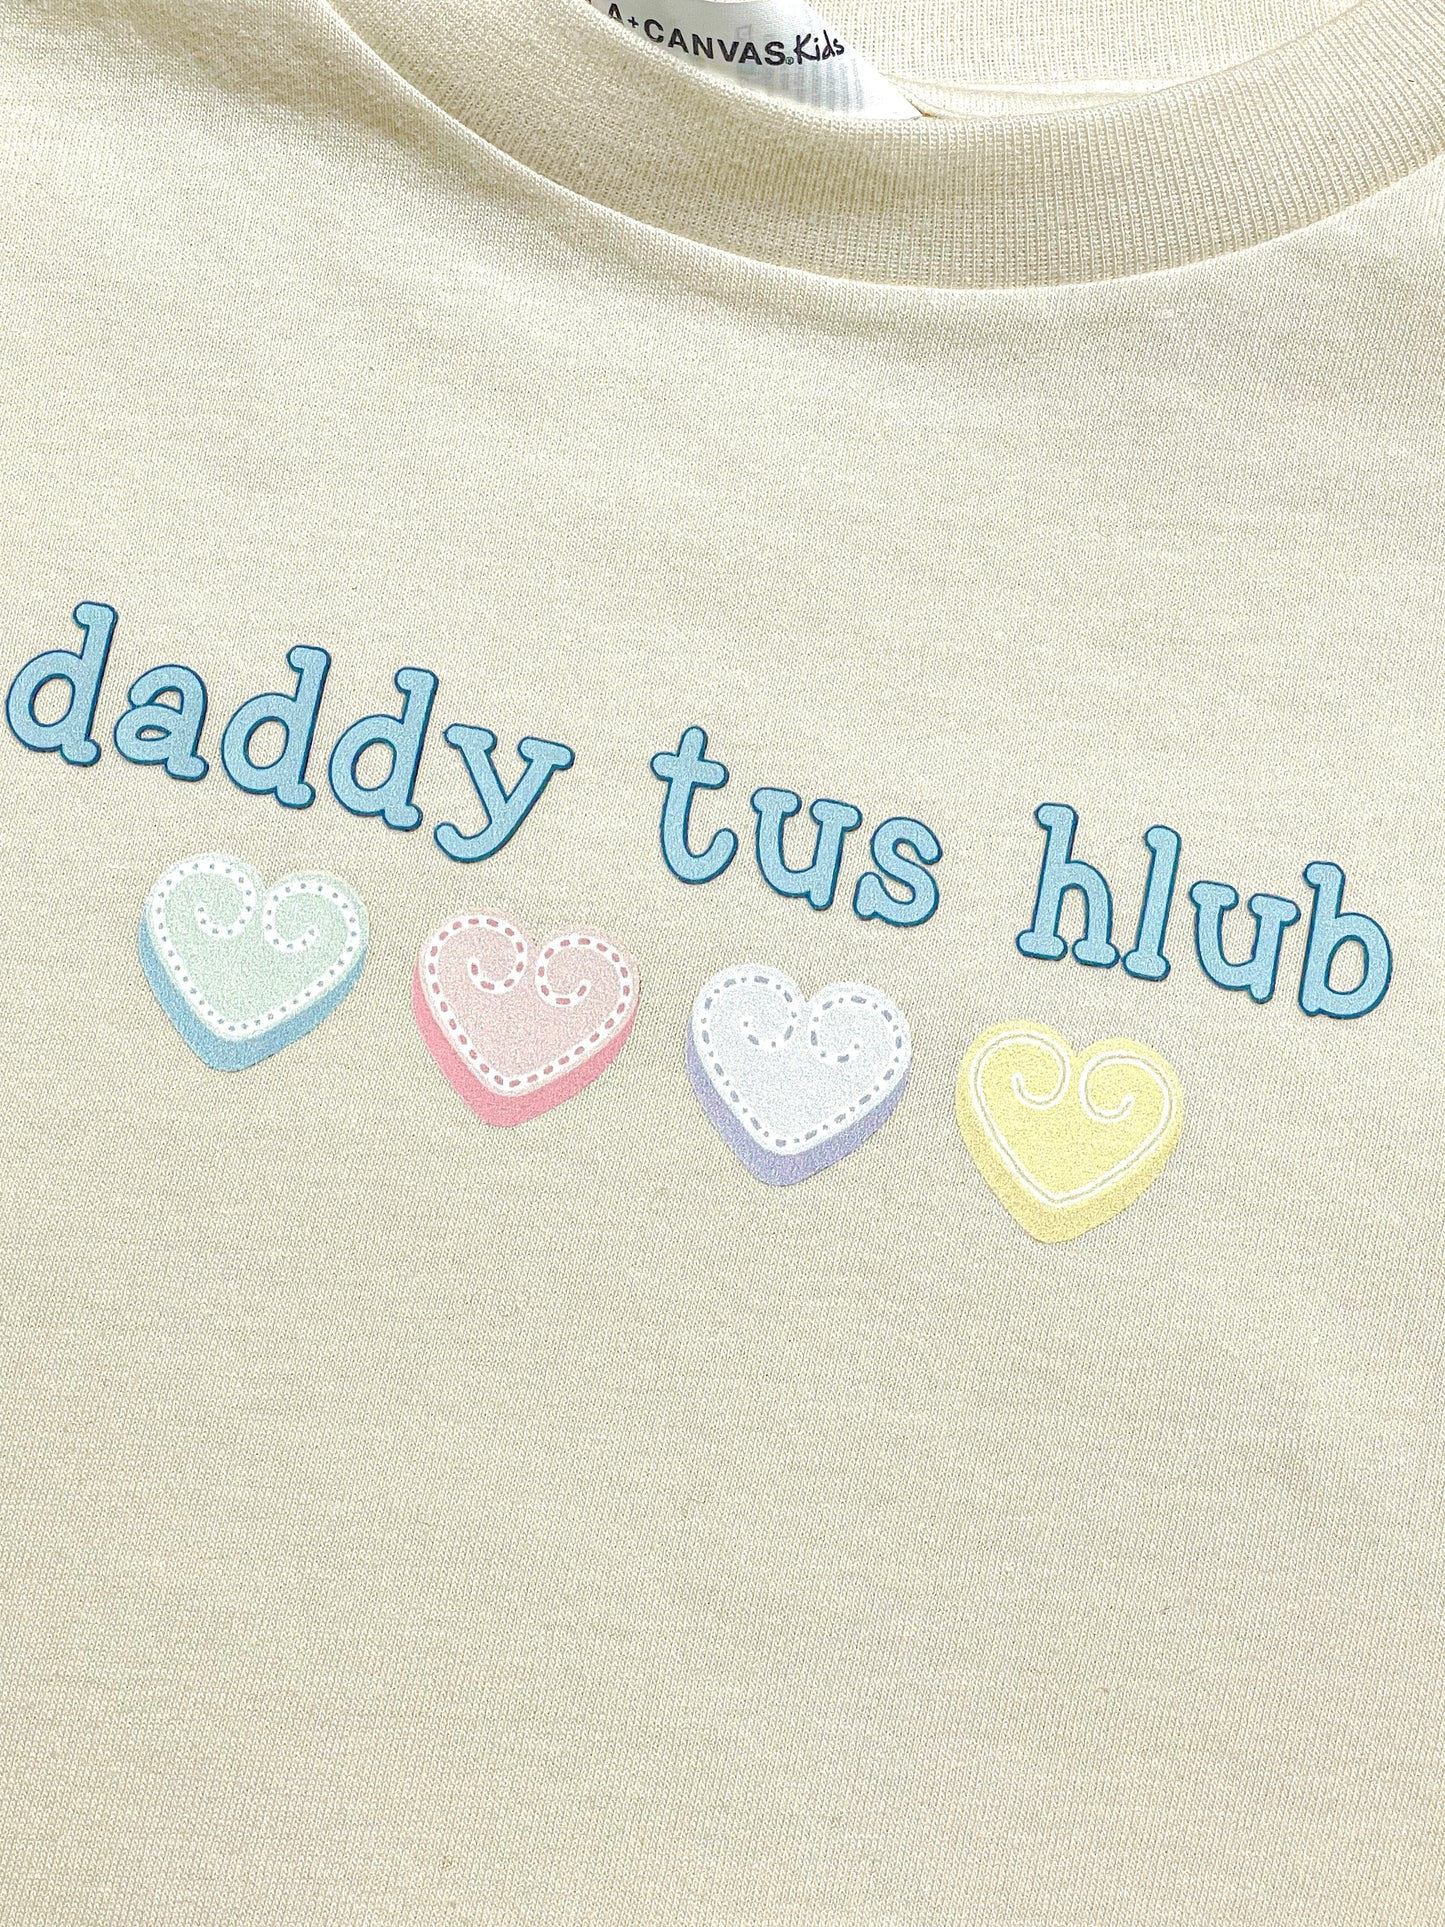 Daddy Tus Hlub (Daddy's Love) Unisex T-shirt